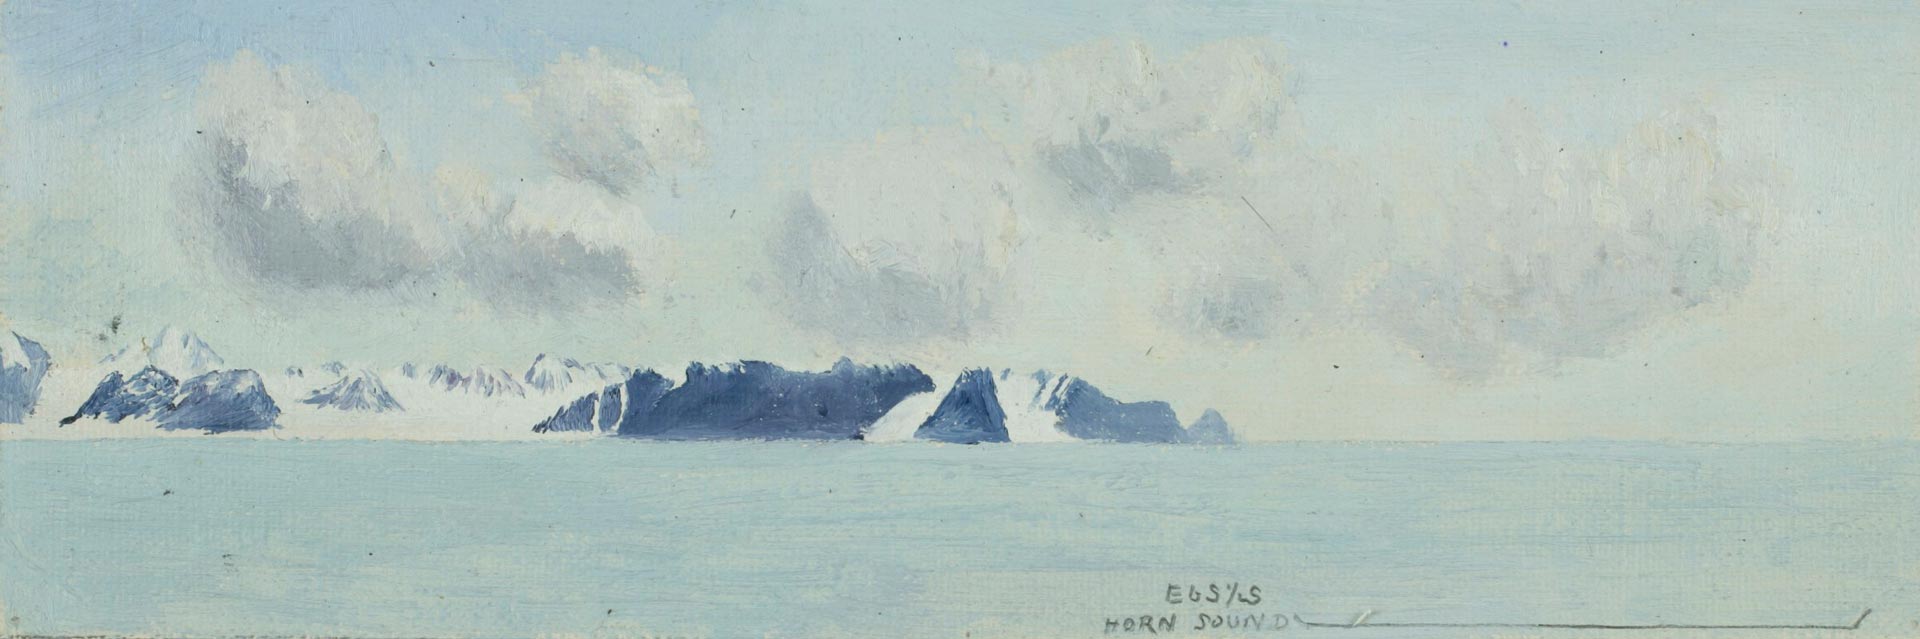 Arctic illustration